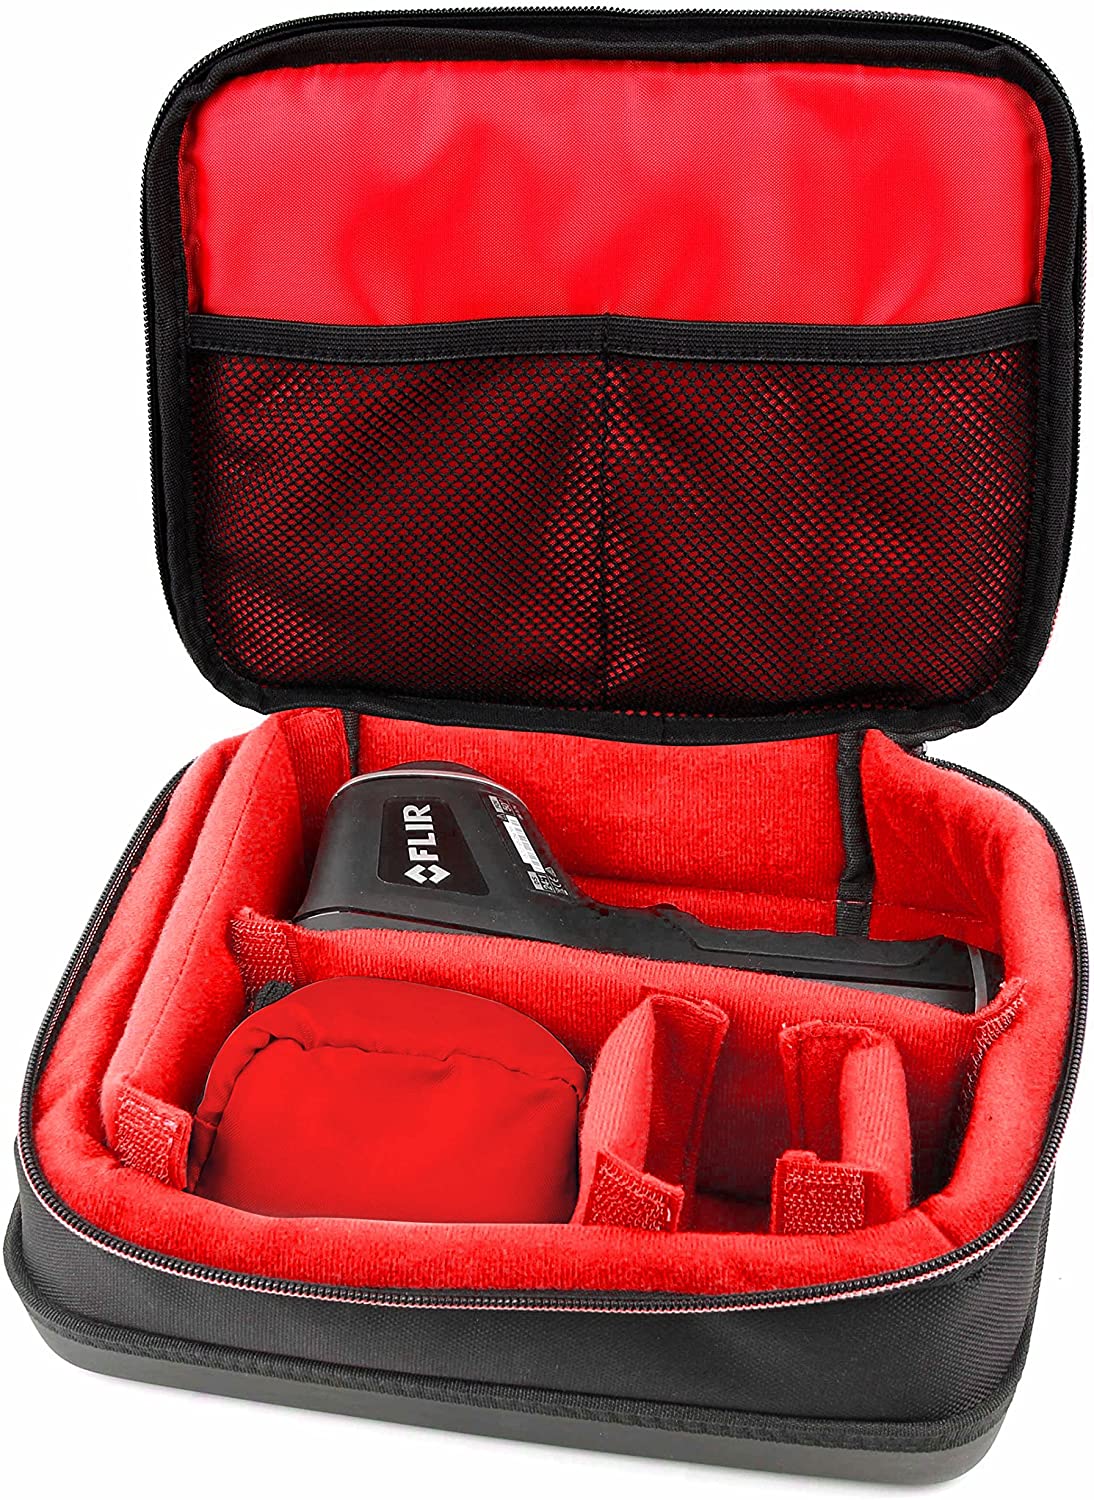 Case For FLIR TG165 Spot Thermal Camera Red Protective EVA Portable Bag 